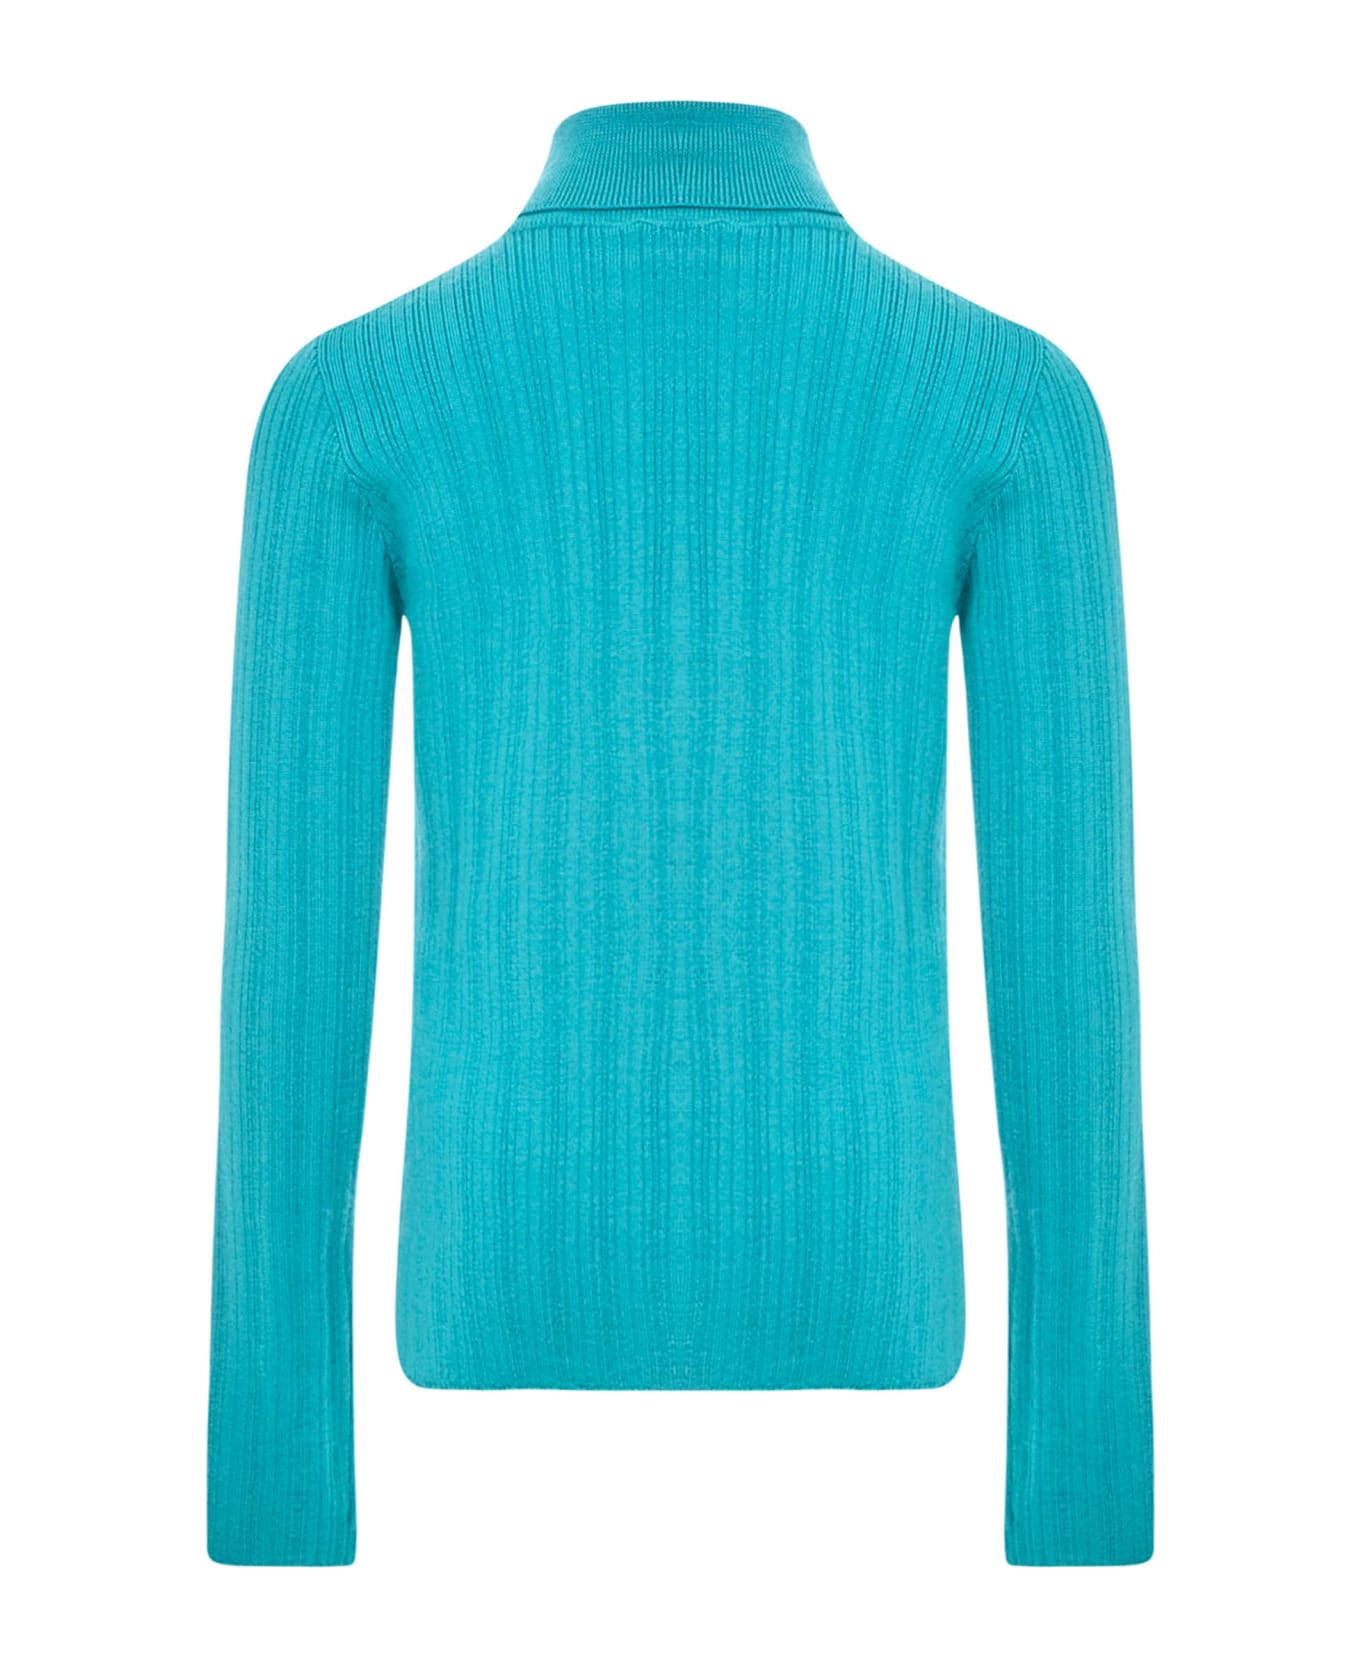 Gucci Sweater - Light blue